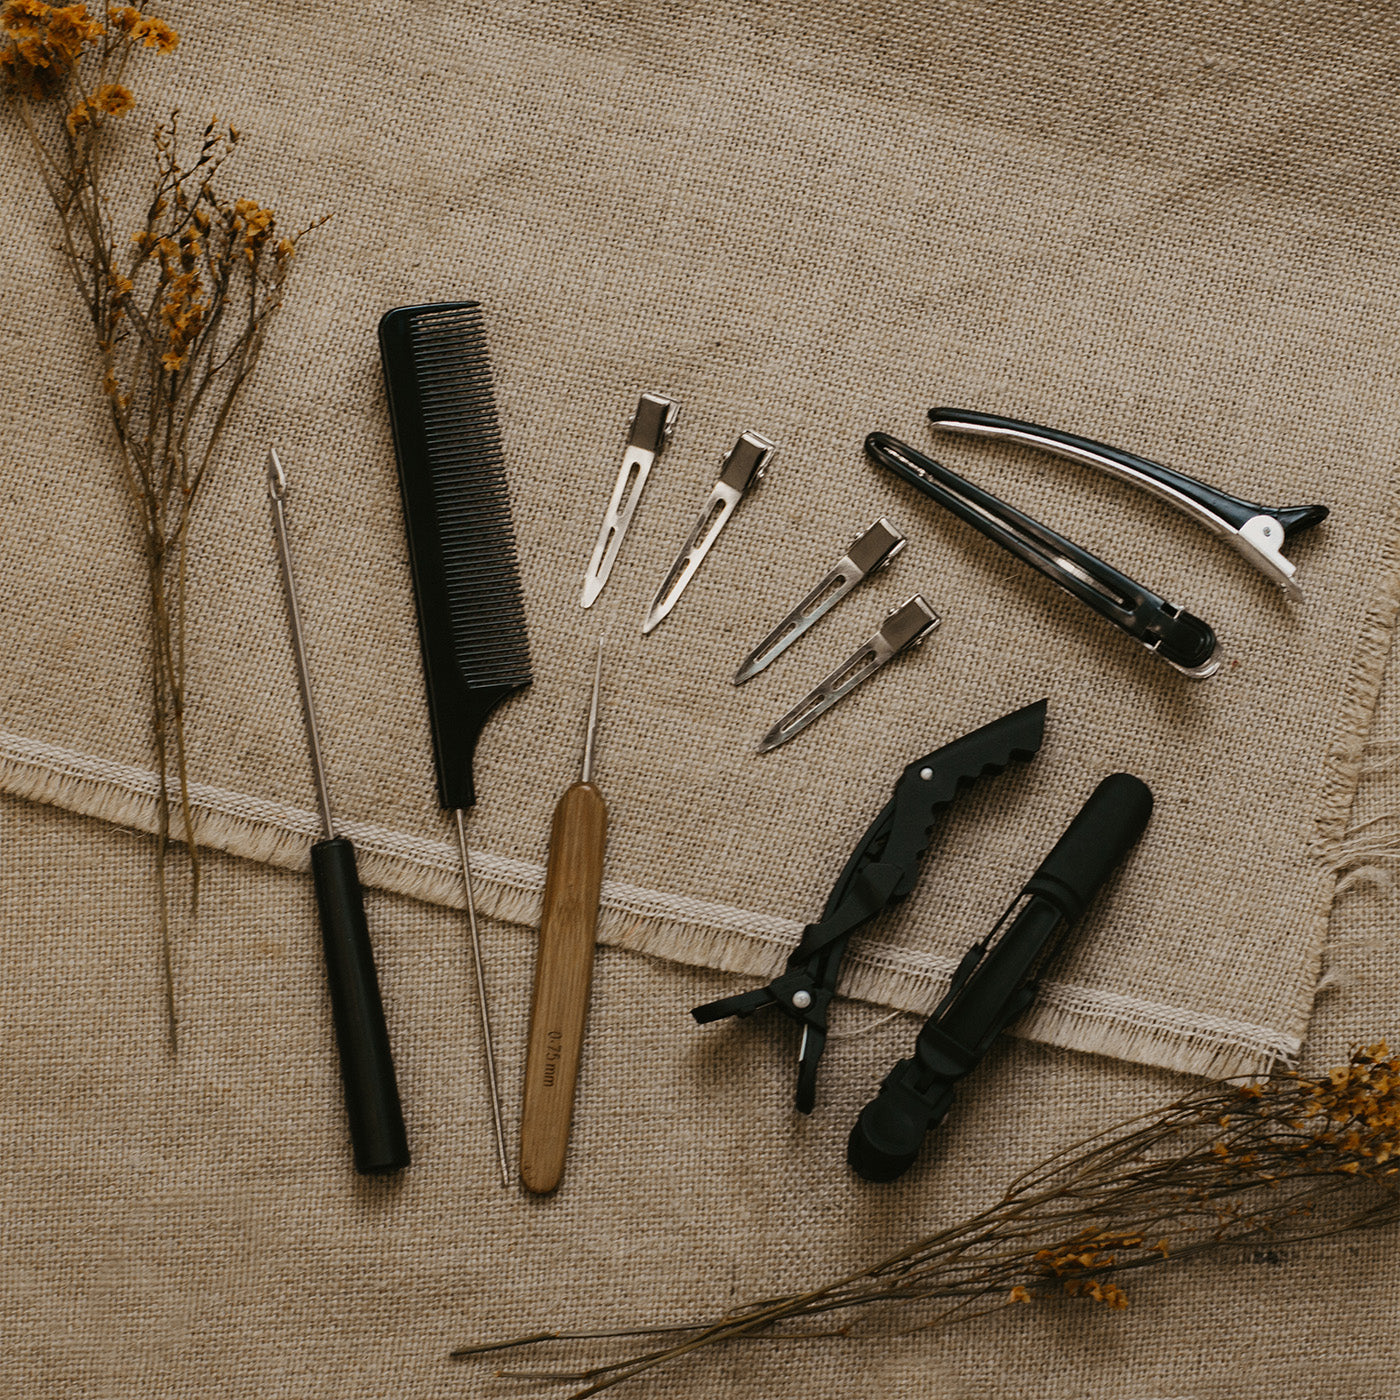 Installing kit, Hair & Tools